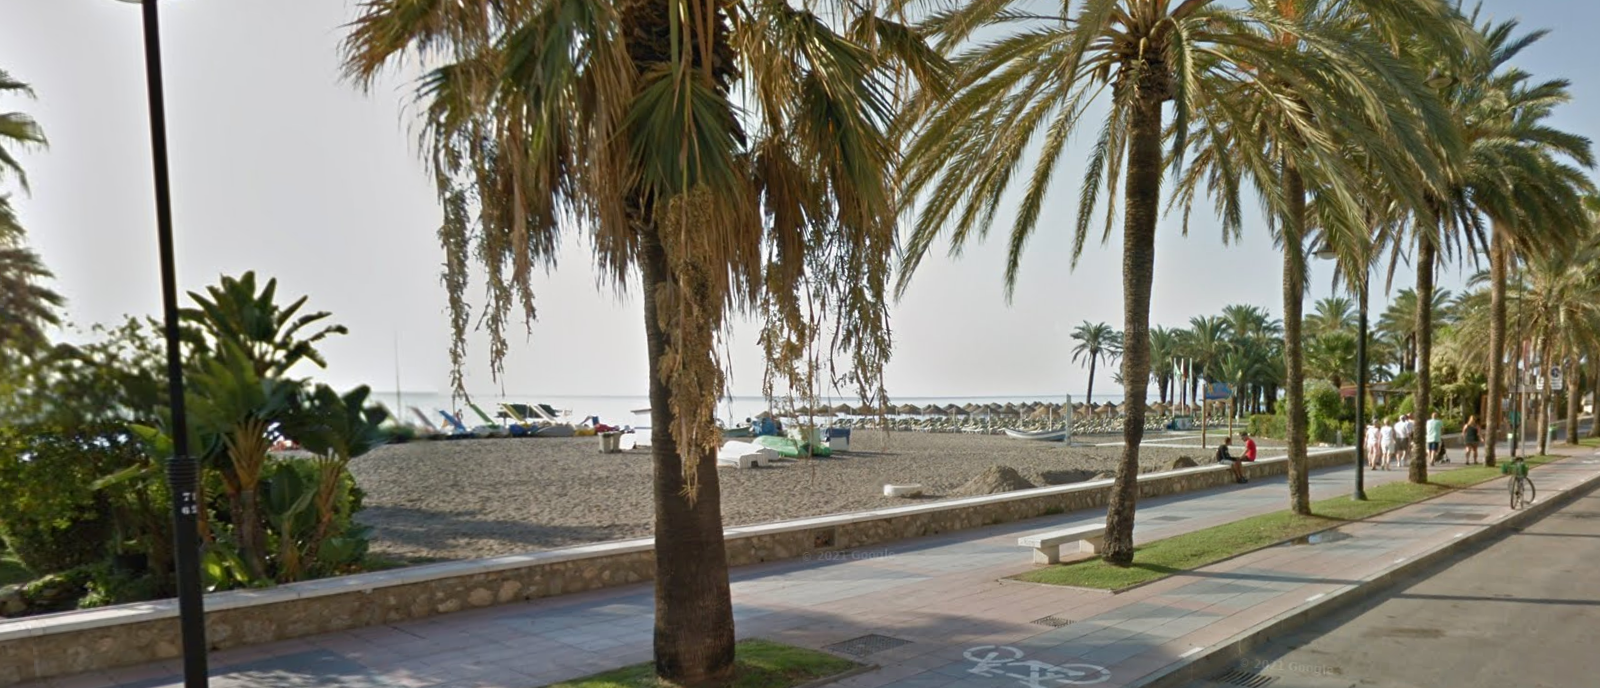 Bajondillo beach by Google Earth